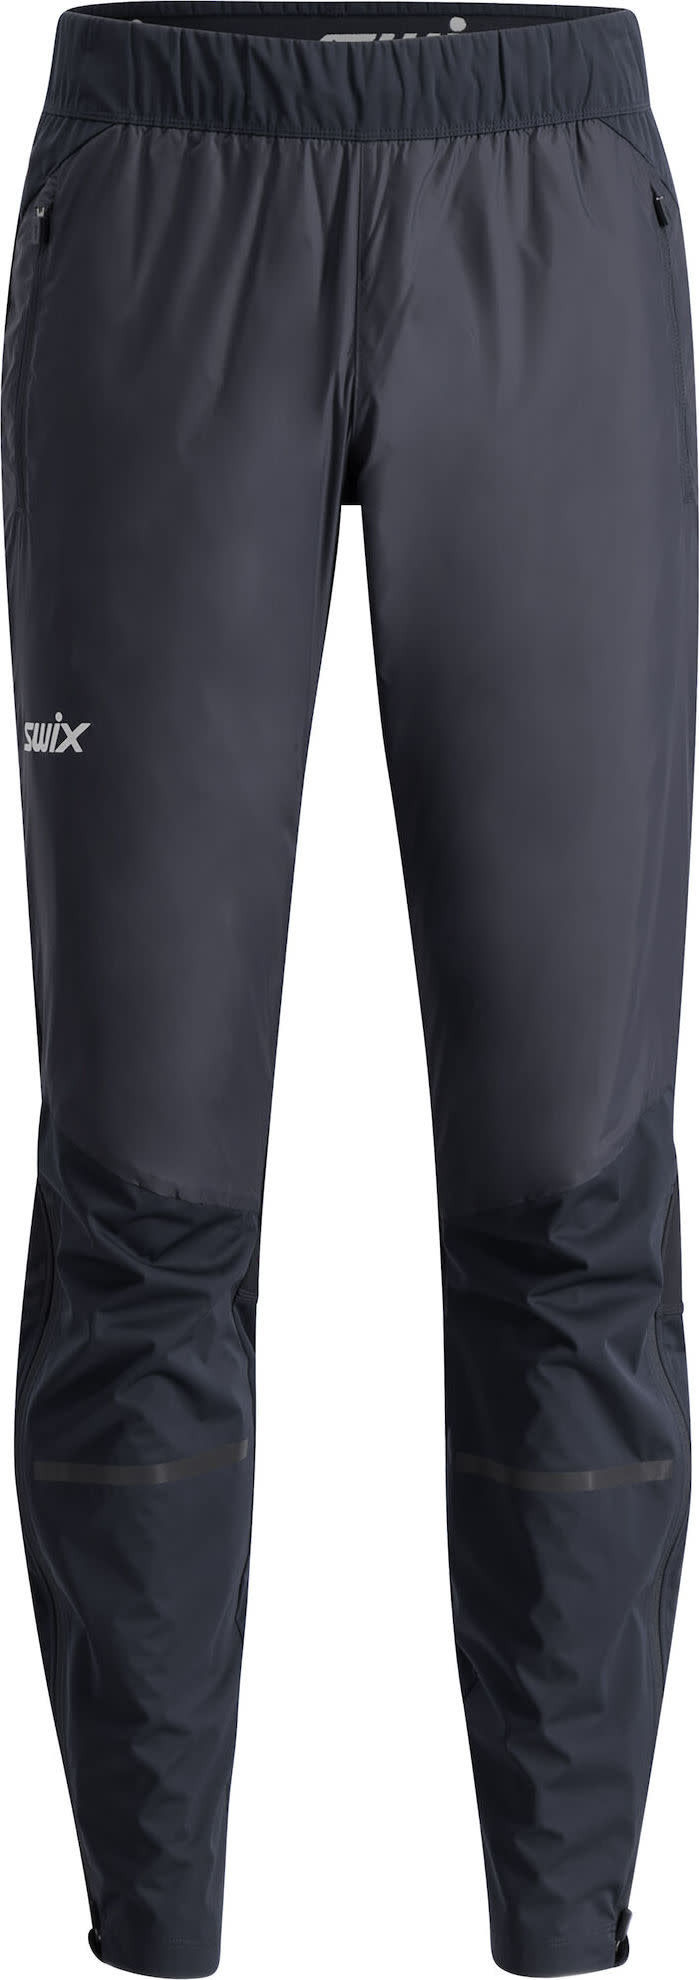 Swix Men’s Dynamic Hybrid Insulated Pants Black